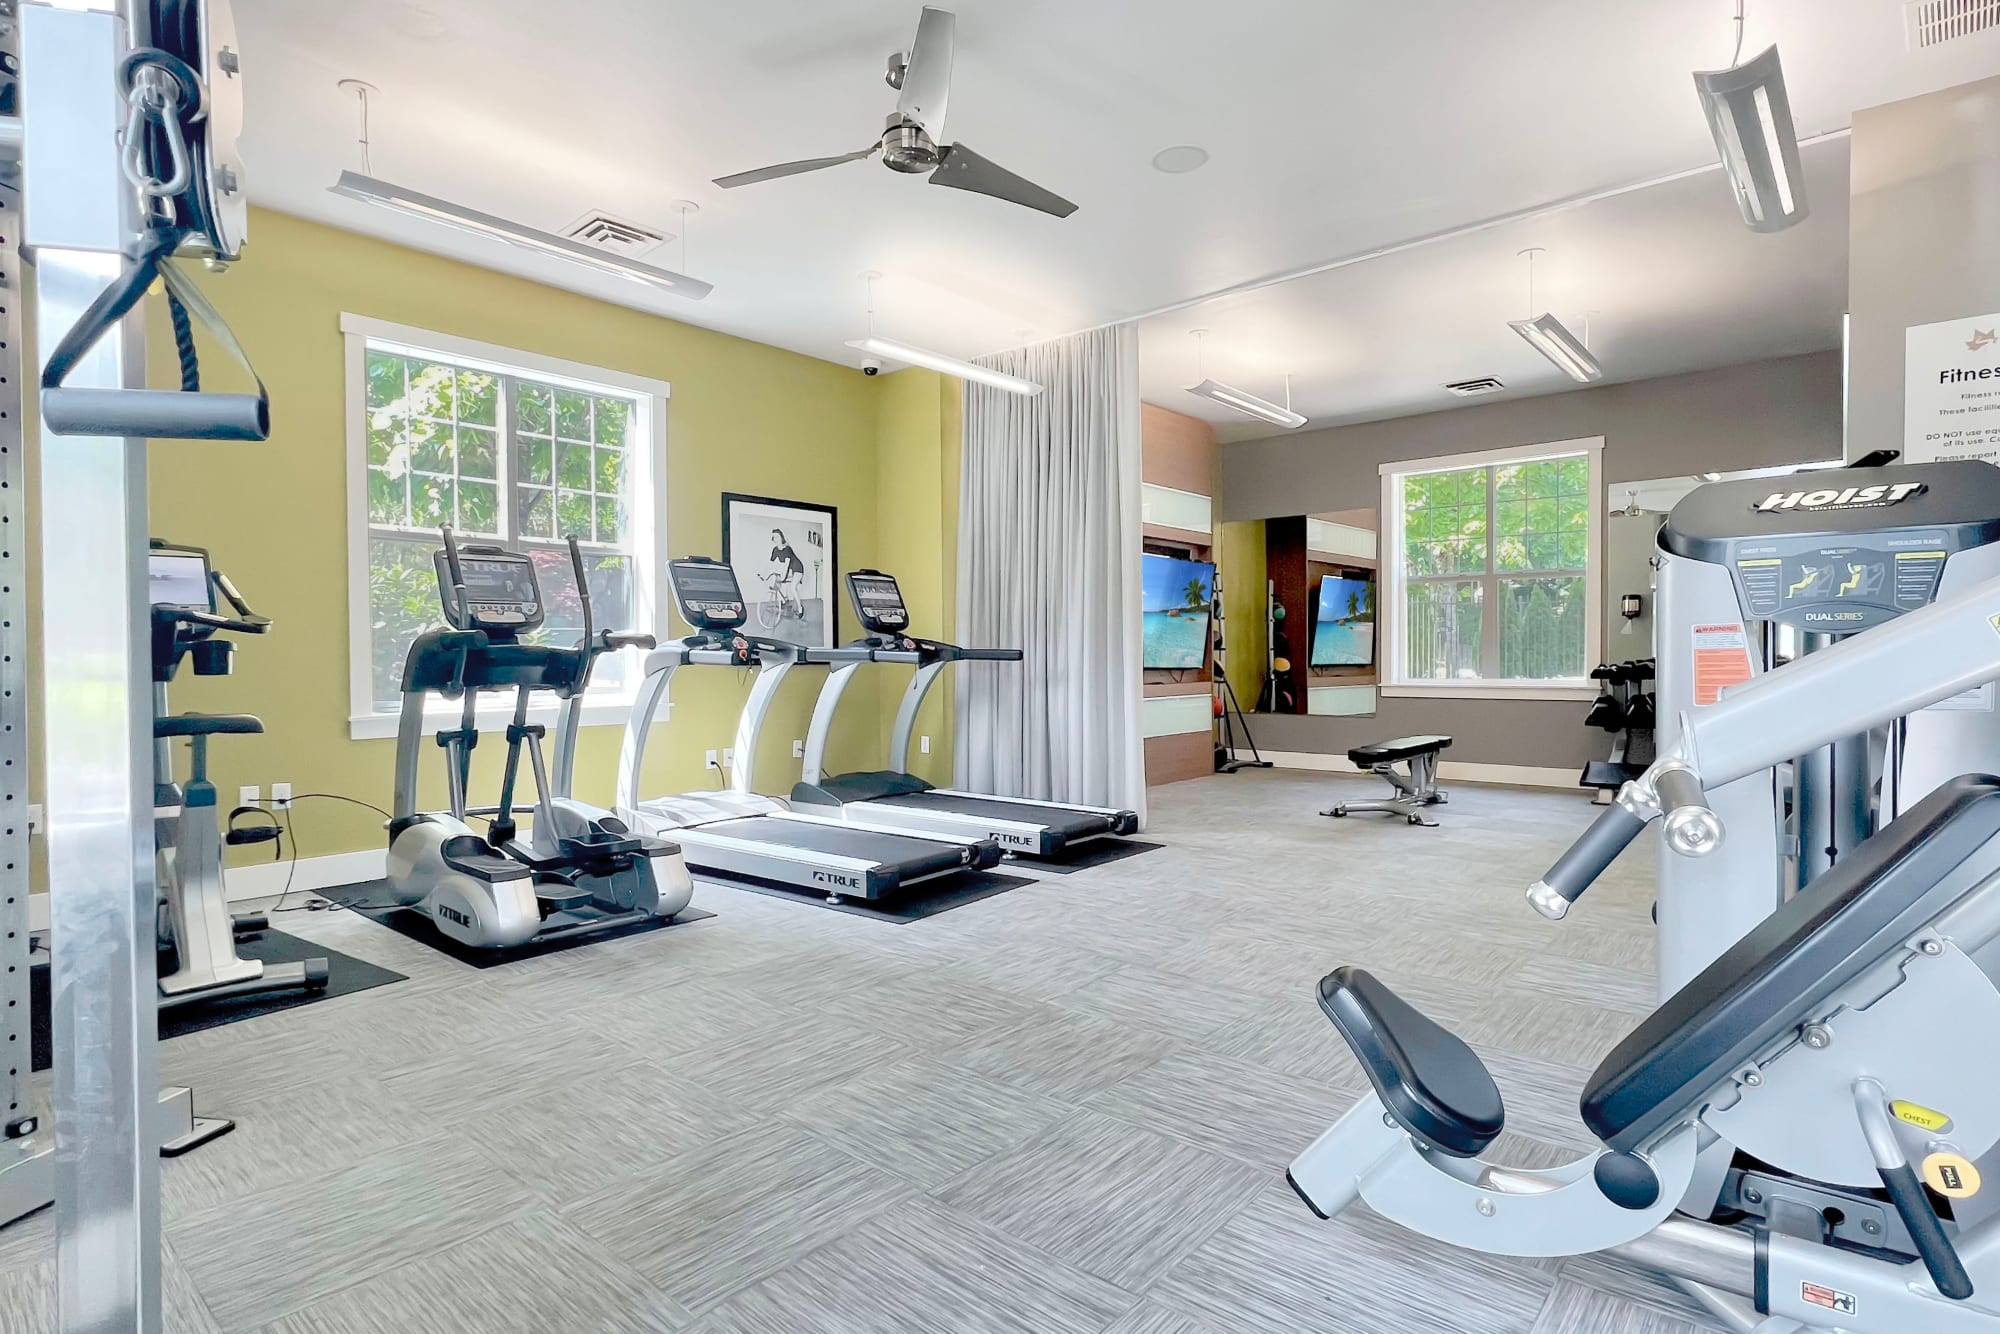 A fitness center with treadmills at Brookside Village in Auburn, Washington